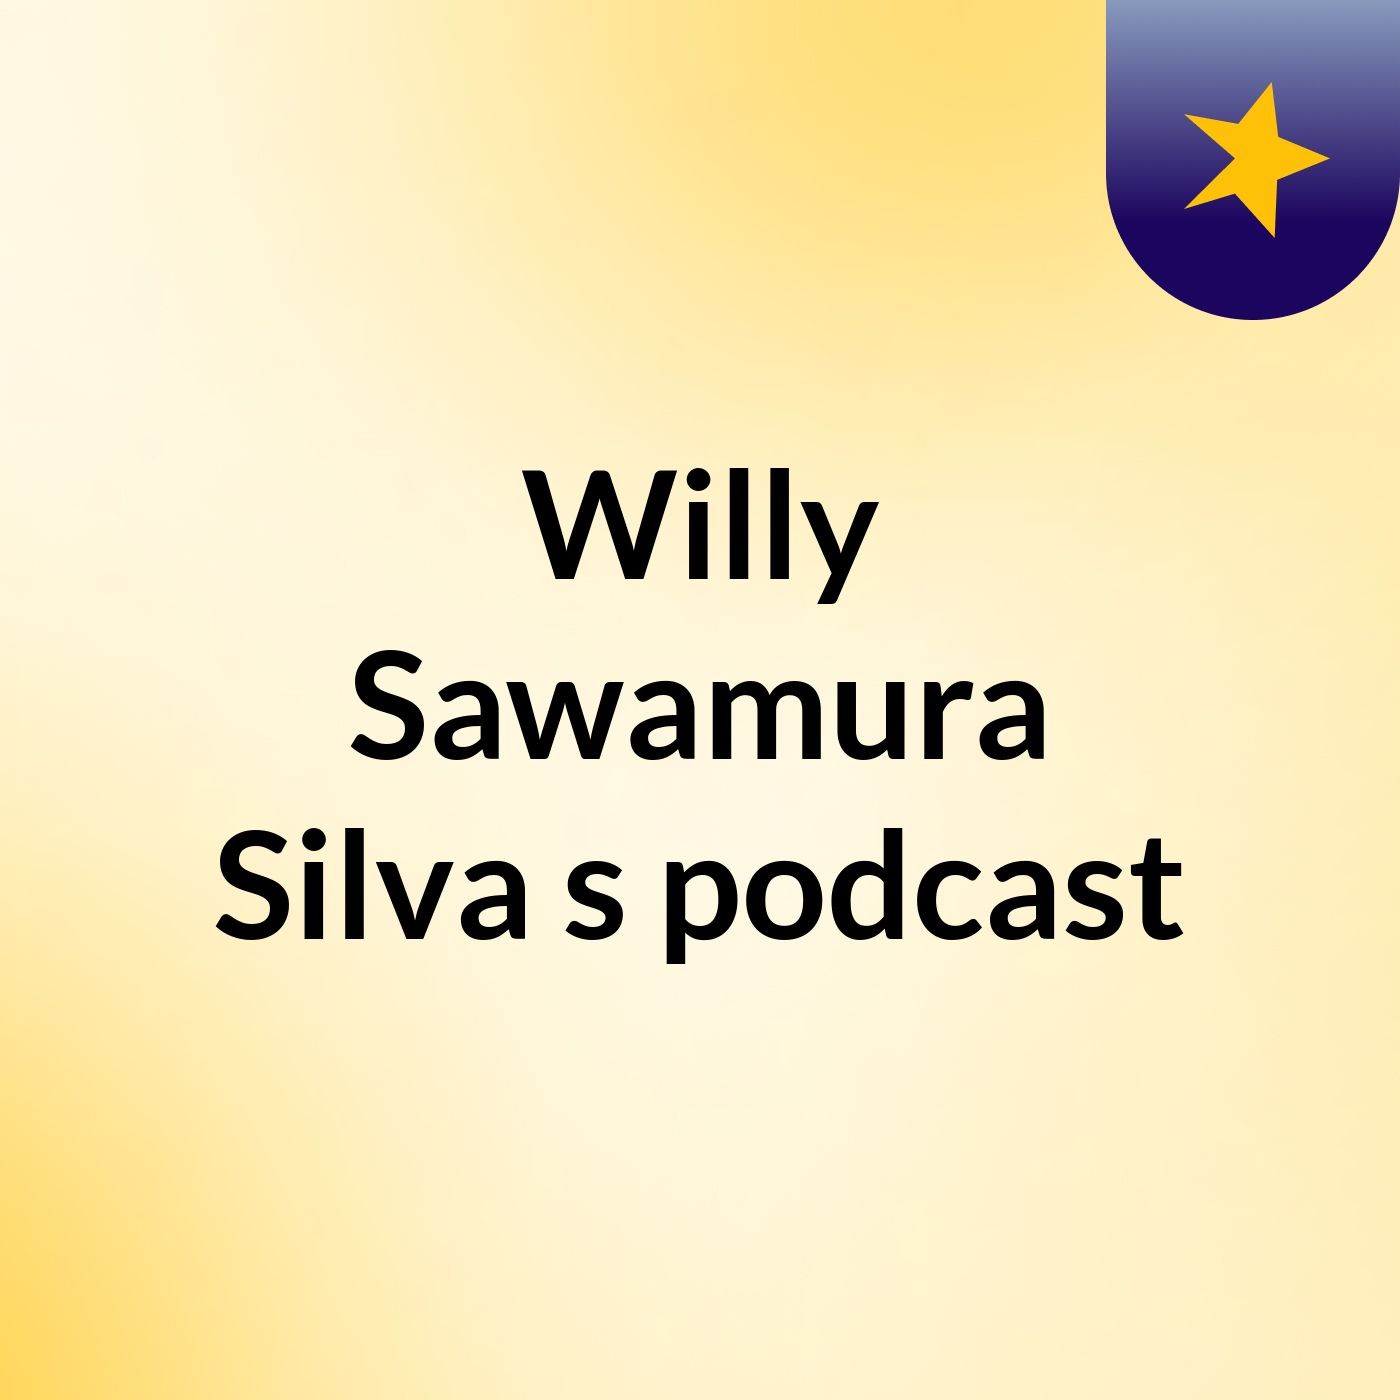 Willy Sawamura Silva's podcast